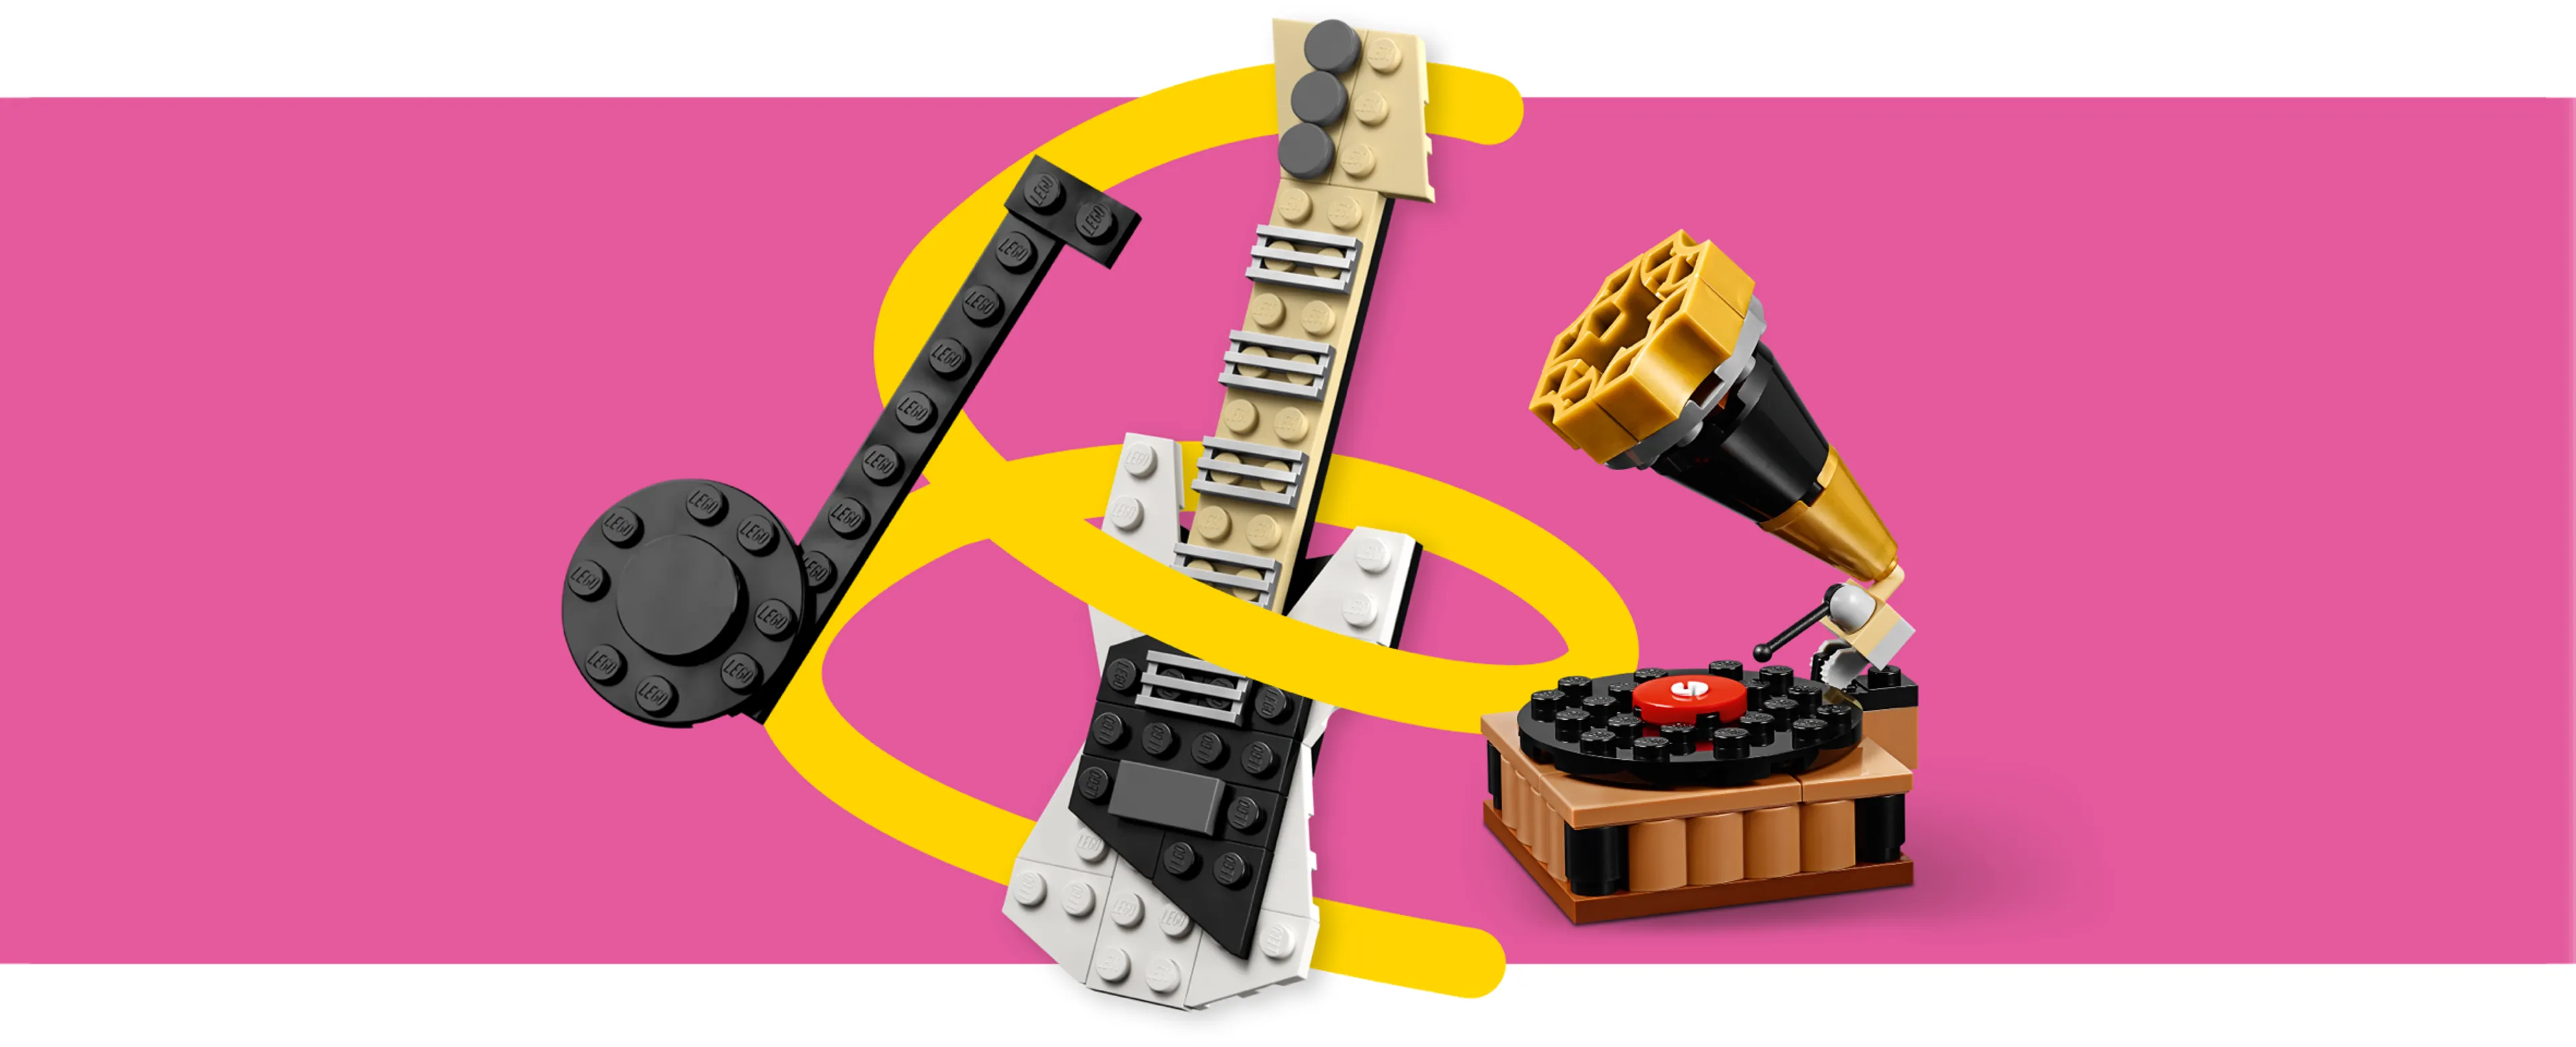 LEGO Brick instruments